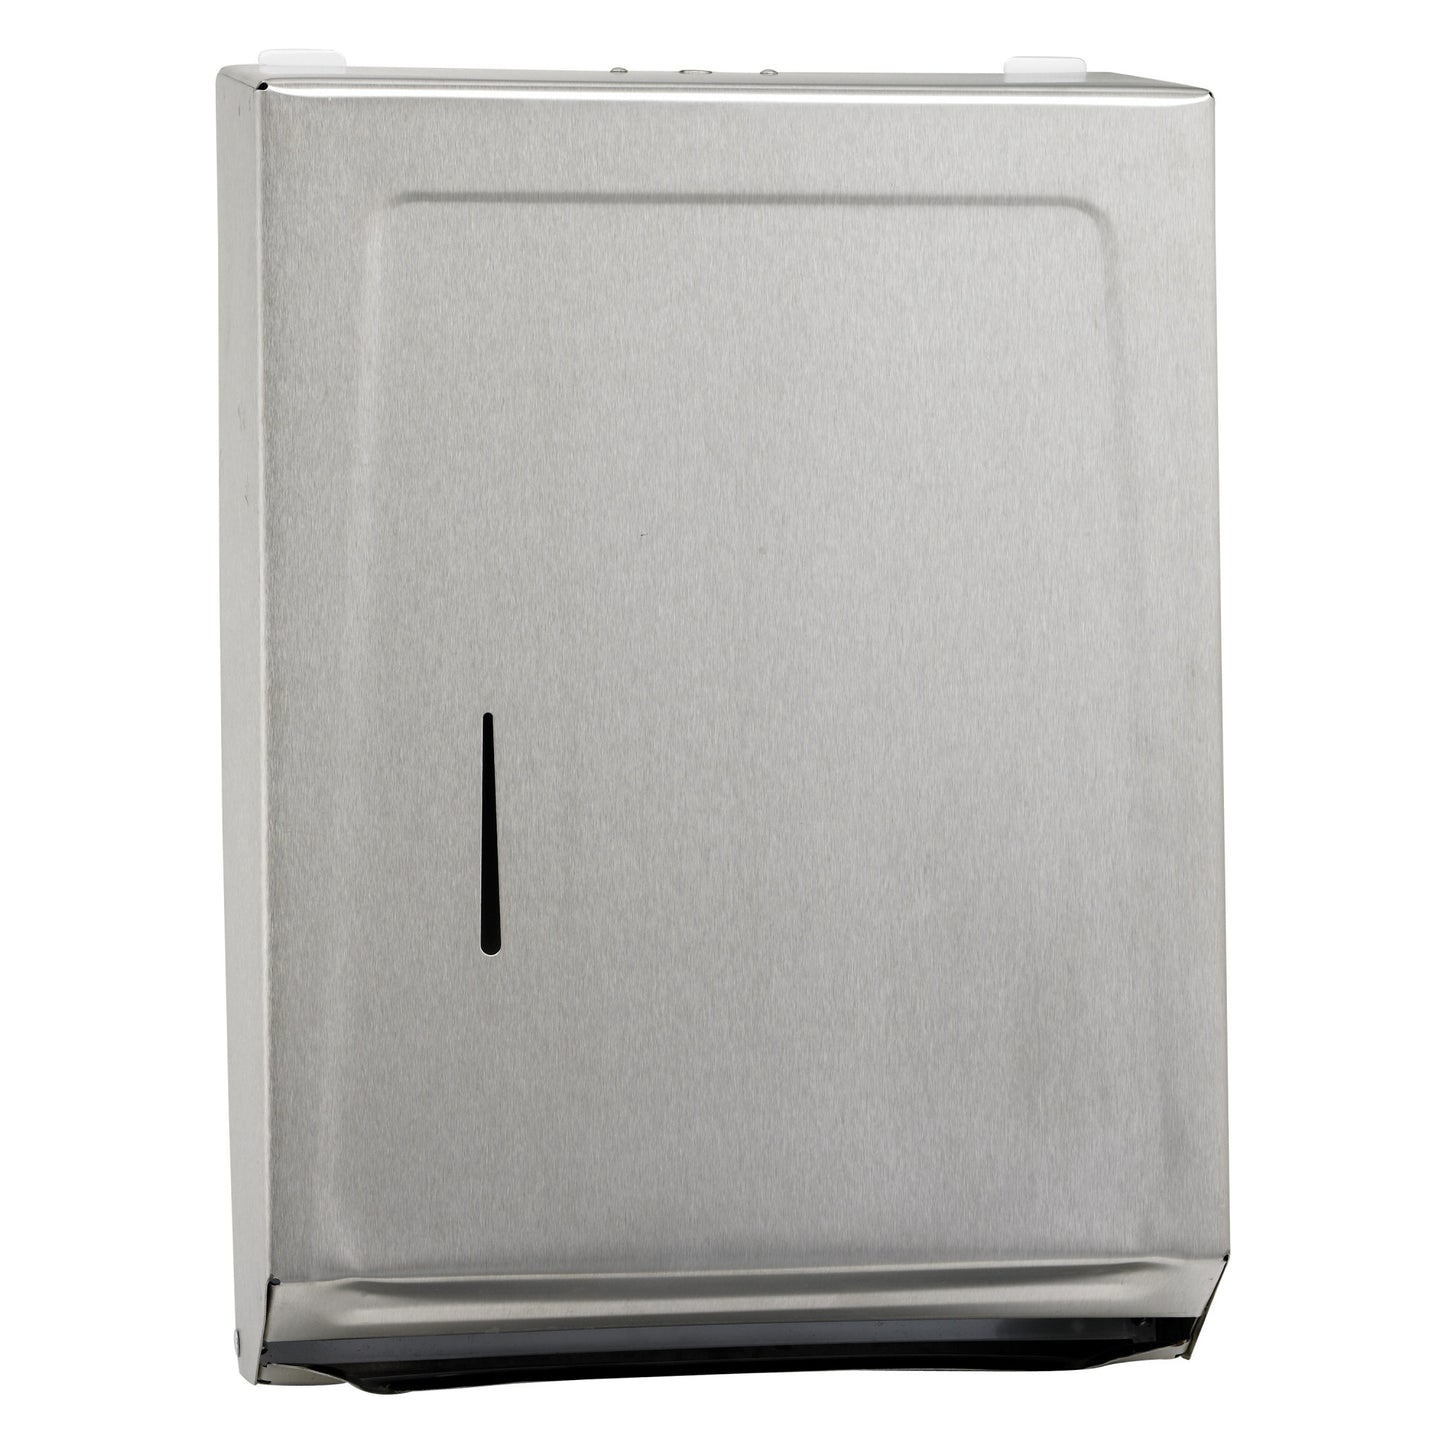 TD-700 - Multi-Fold Paper Towel Metal Dispenser - Stainless Steel